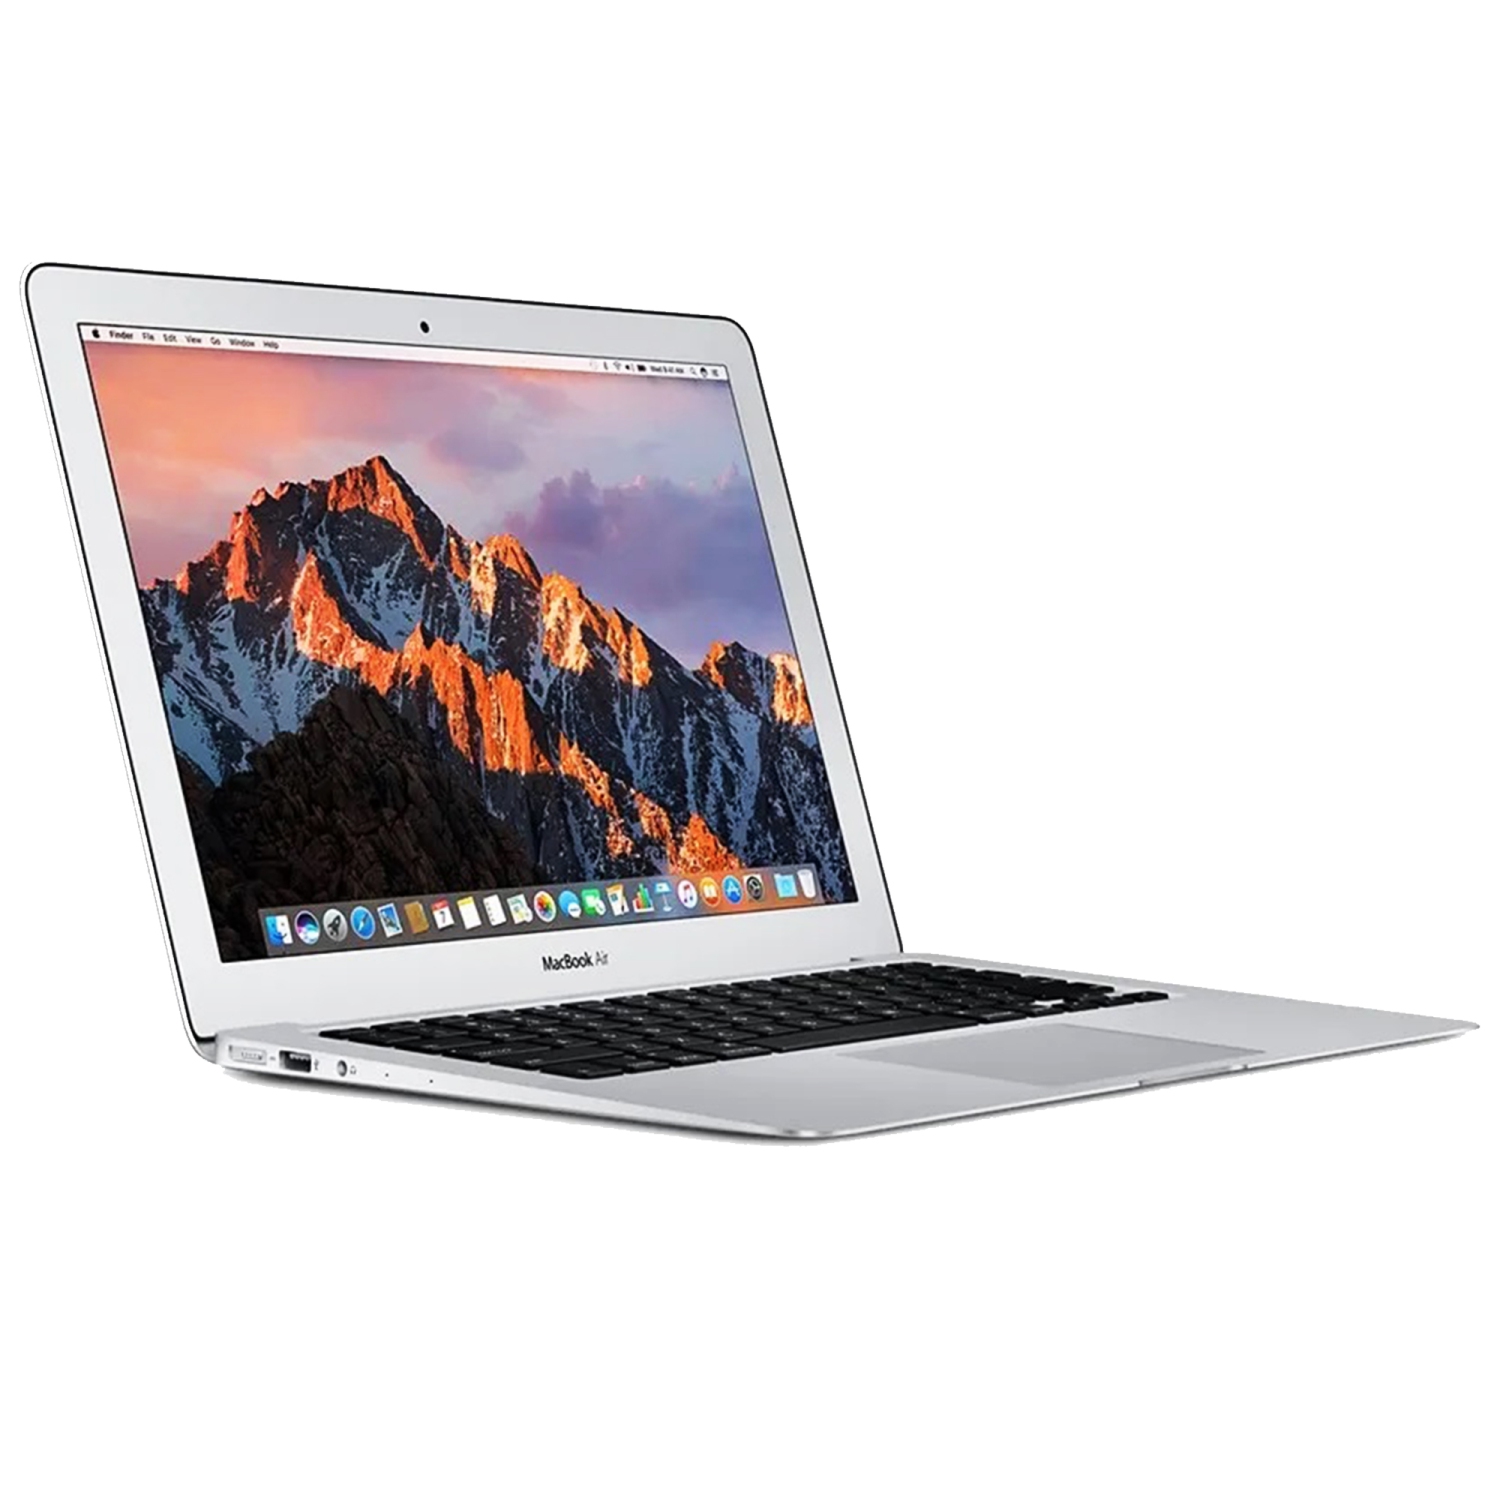 Refurbished (Fair) - Apple MacBook Air A1466 Laptop, 13.3 inch